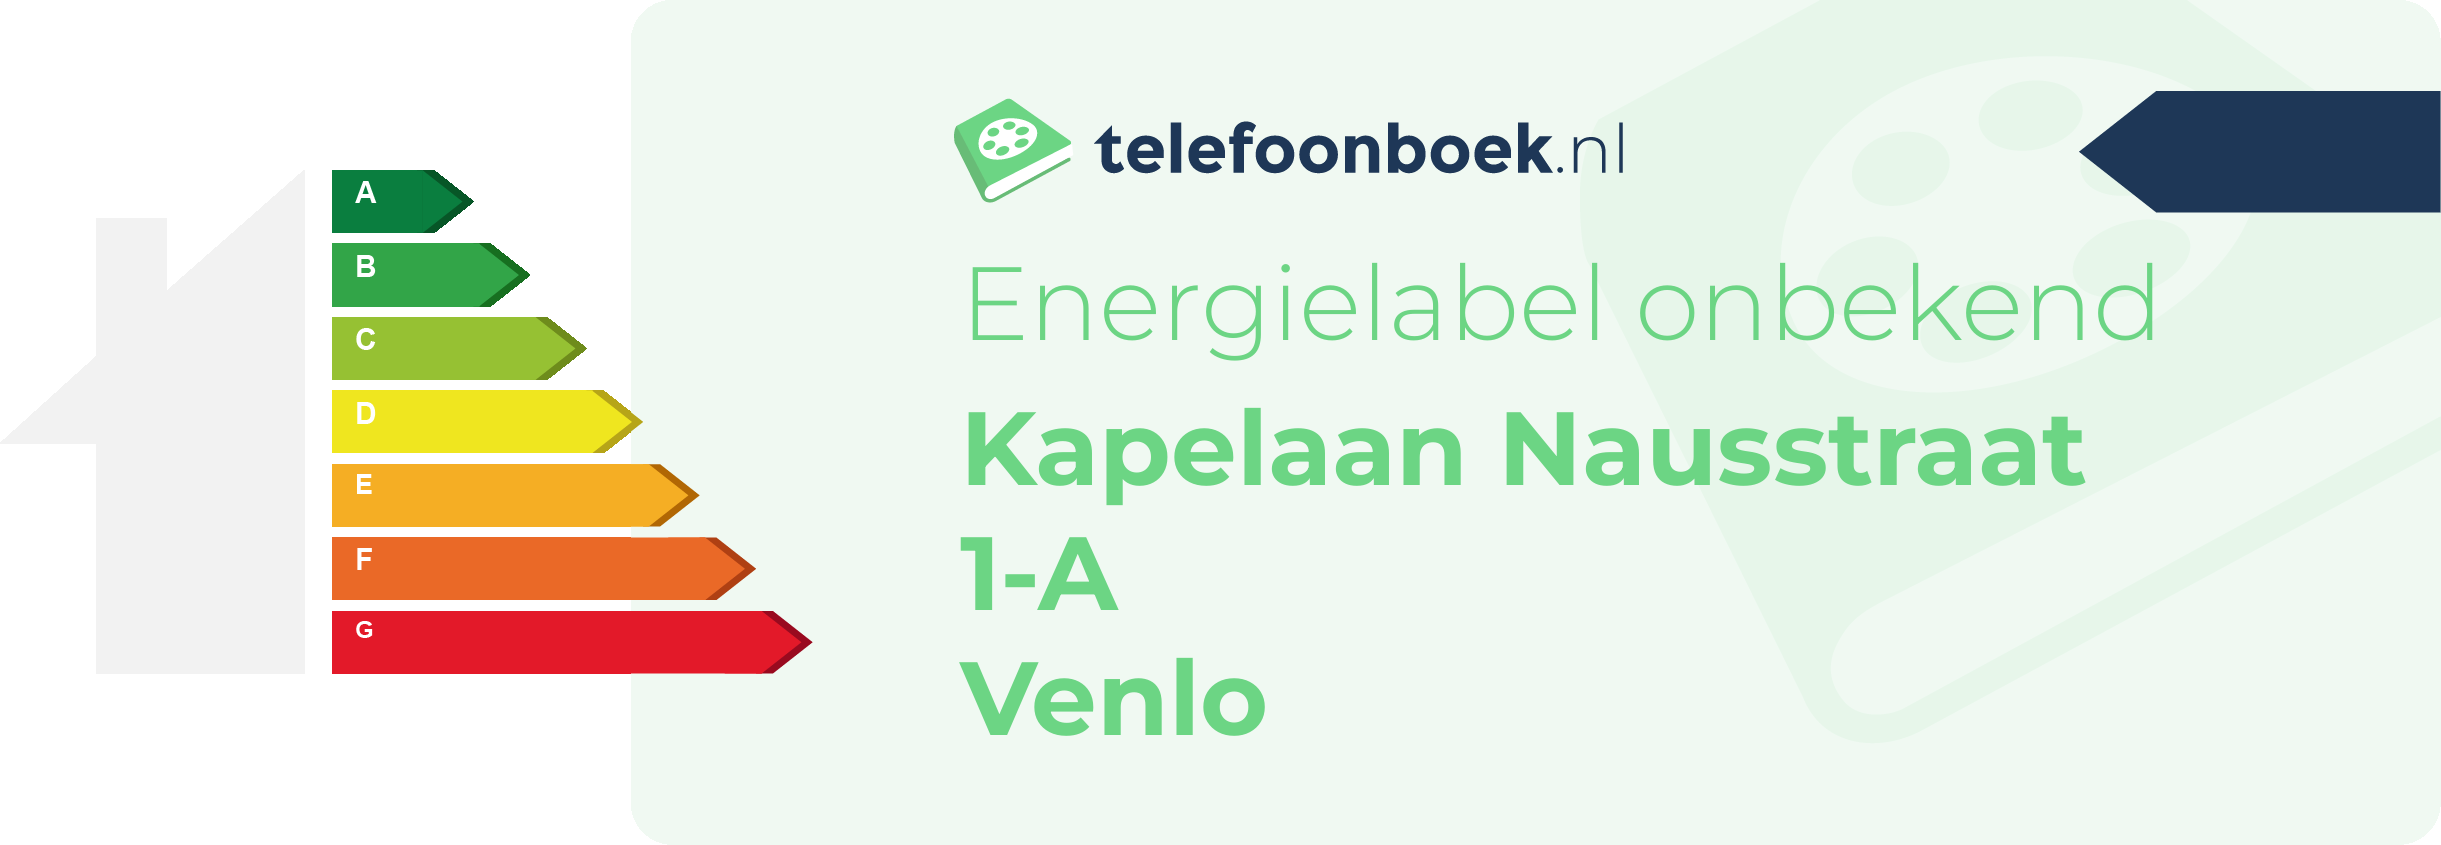 Energielabel Kapelaan Nausstraat 1-A Venlo